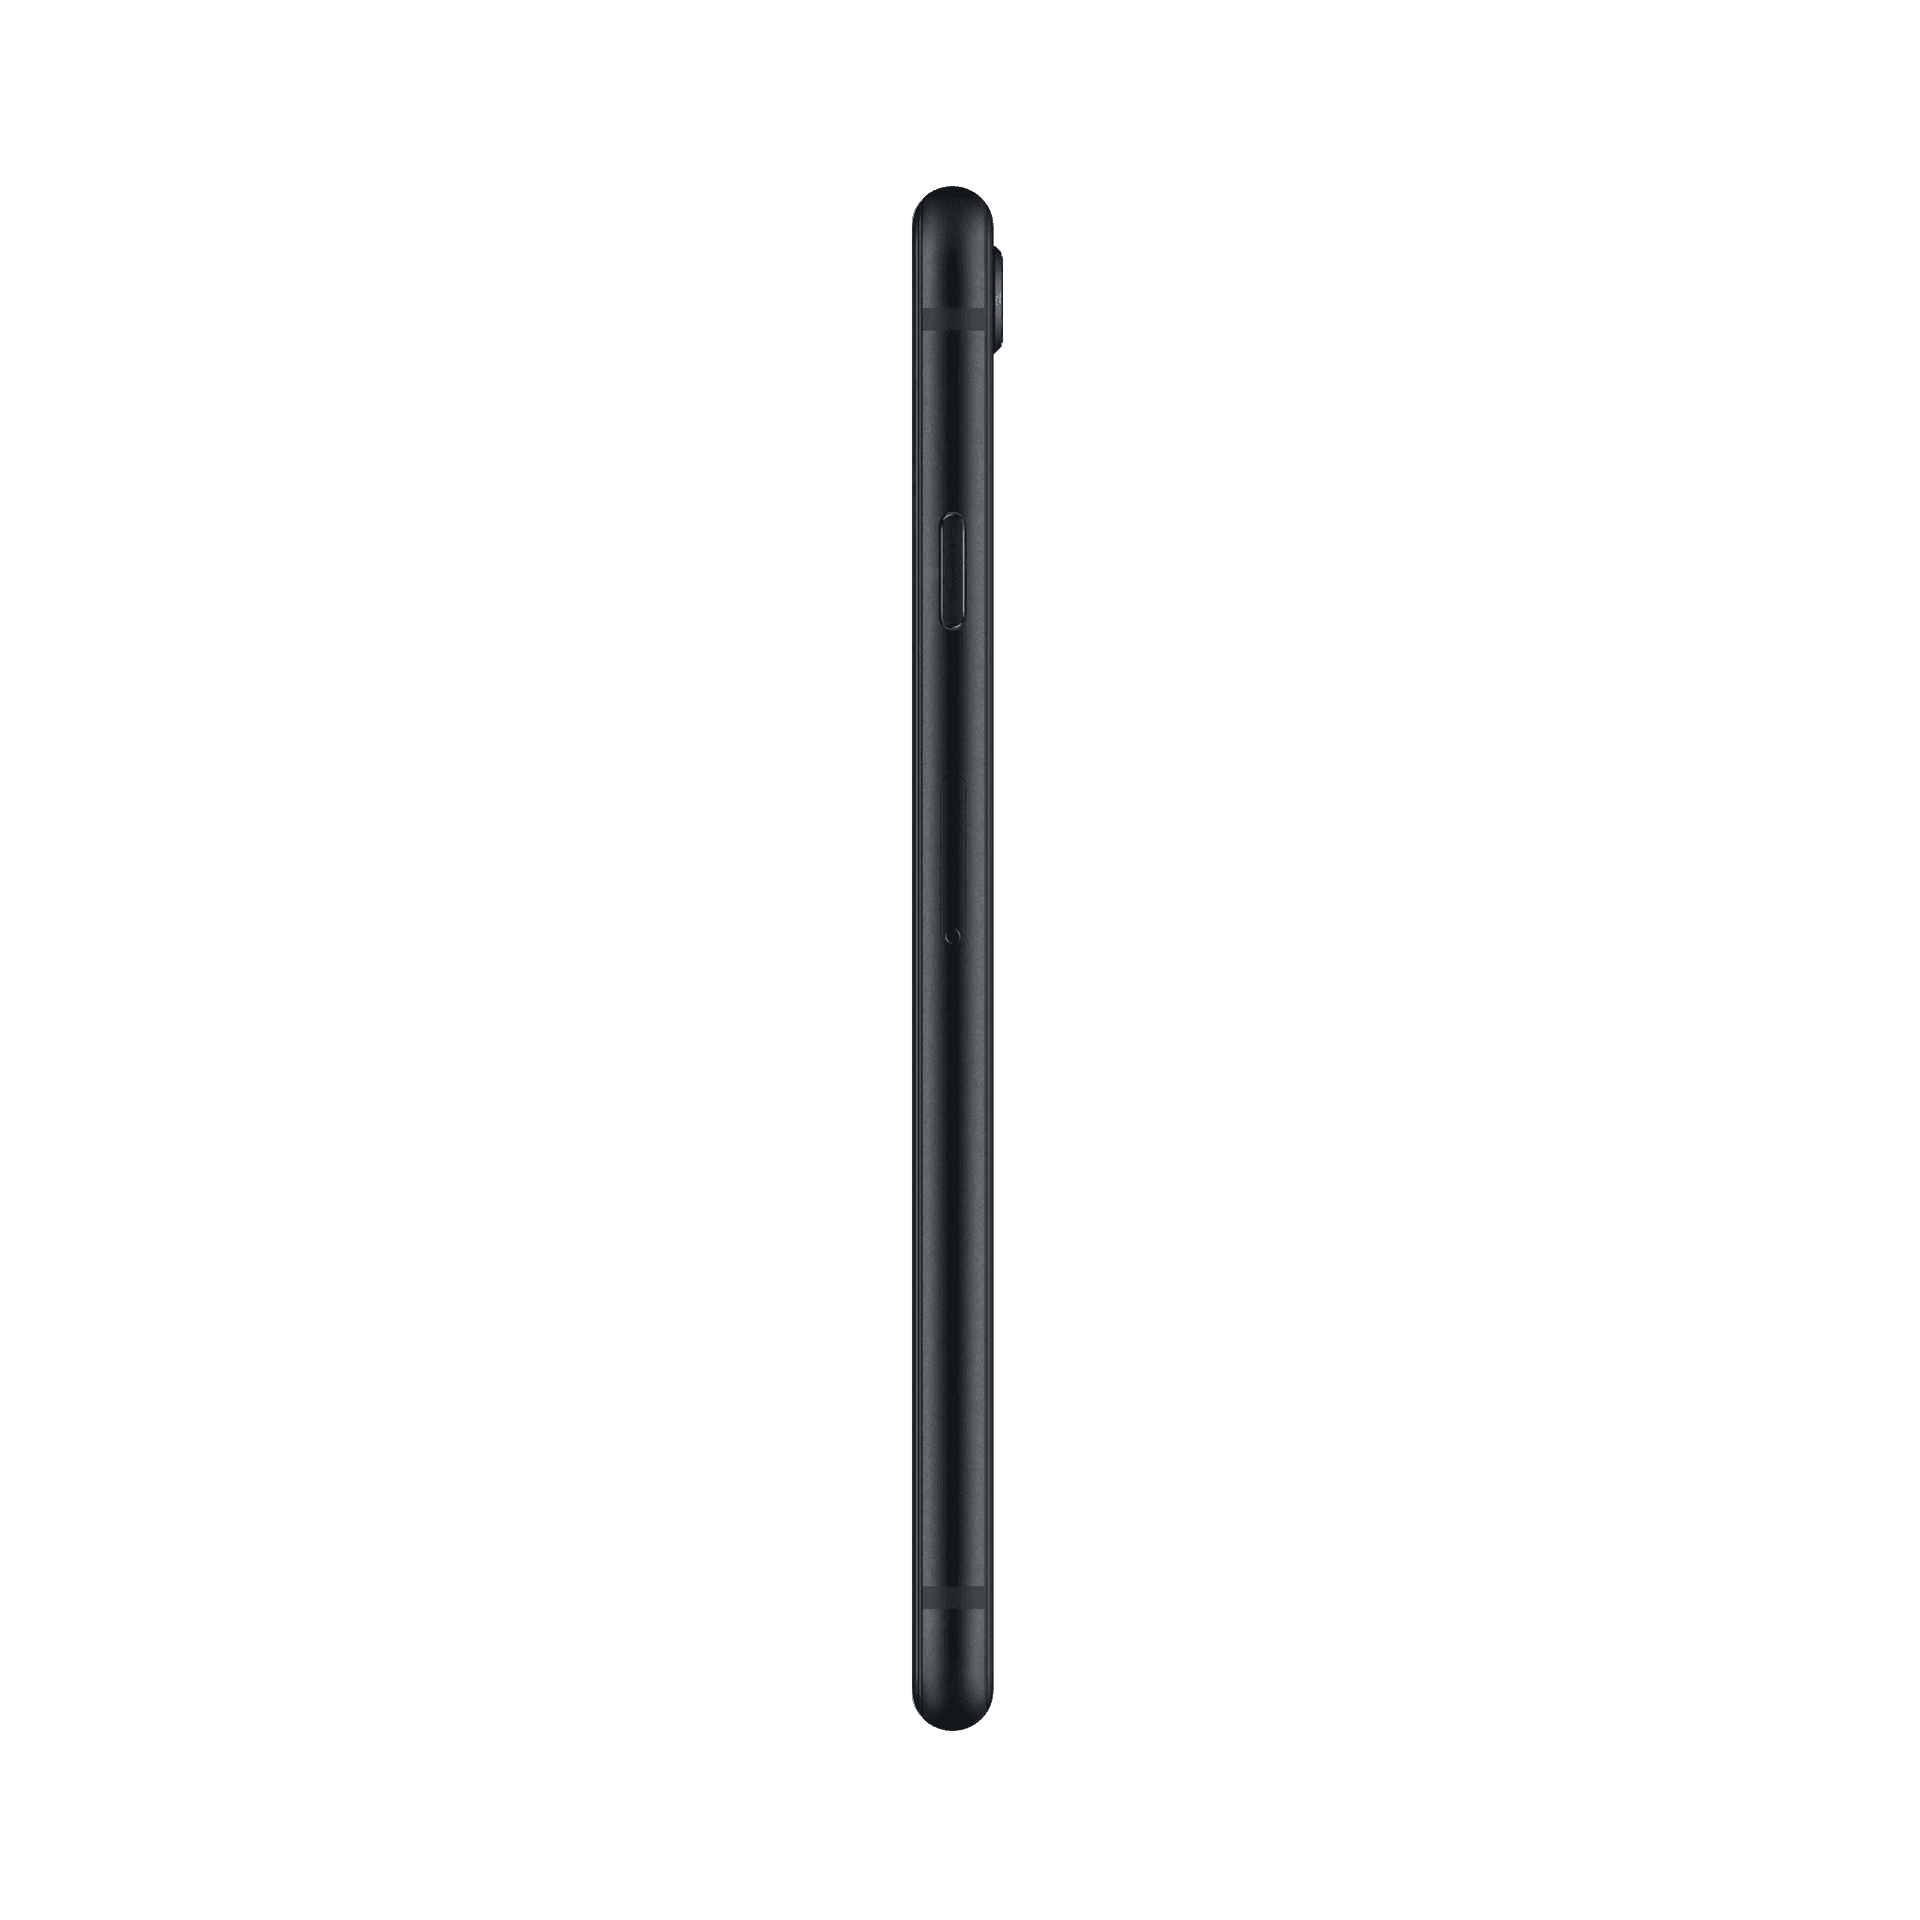 Apple iPhone SE 2020 - 256 GB - Siyah